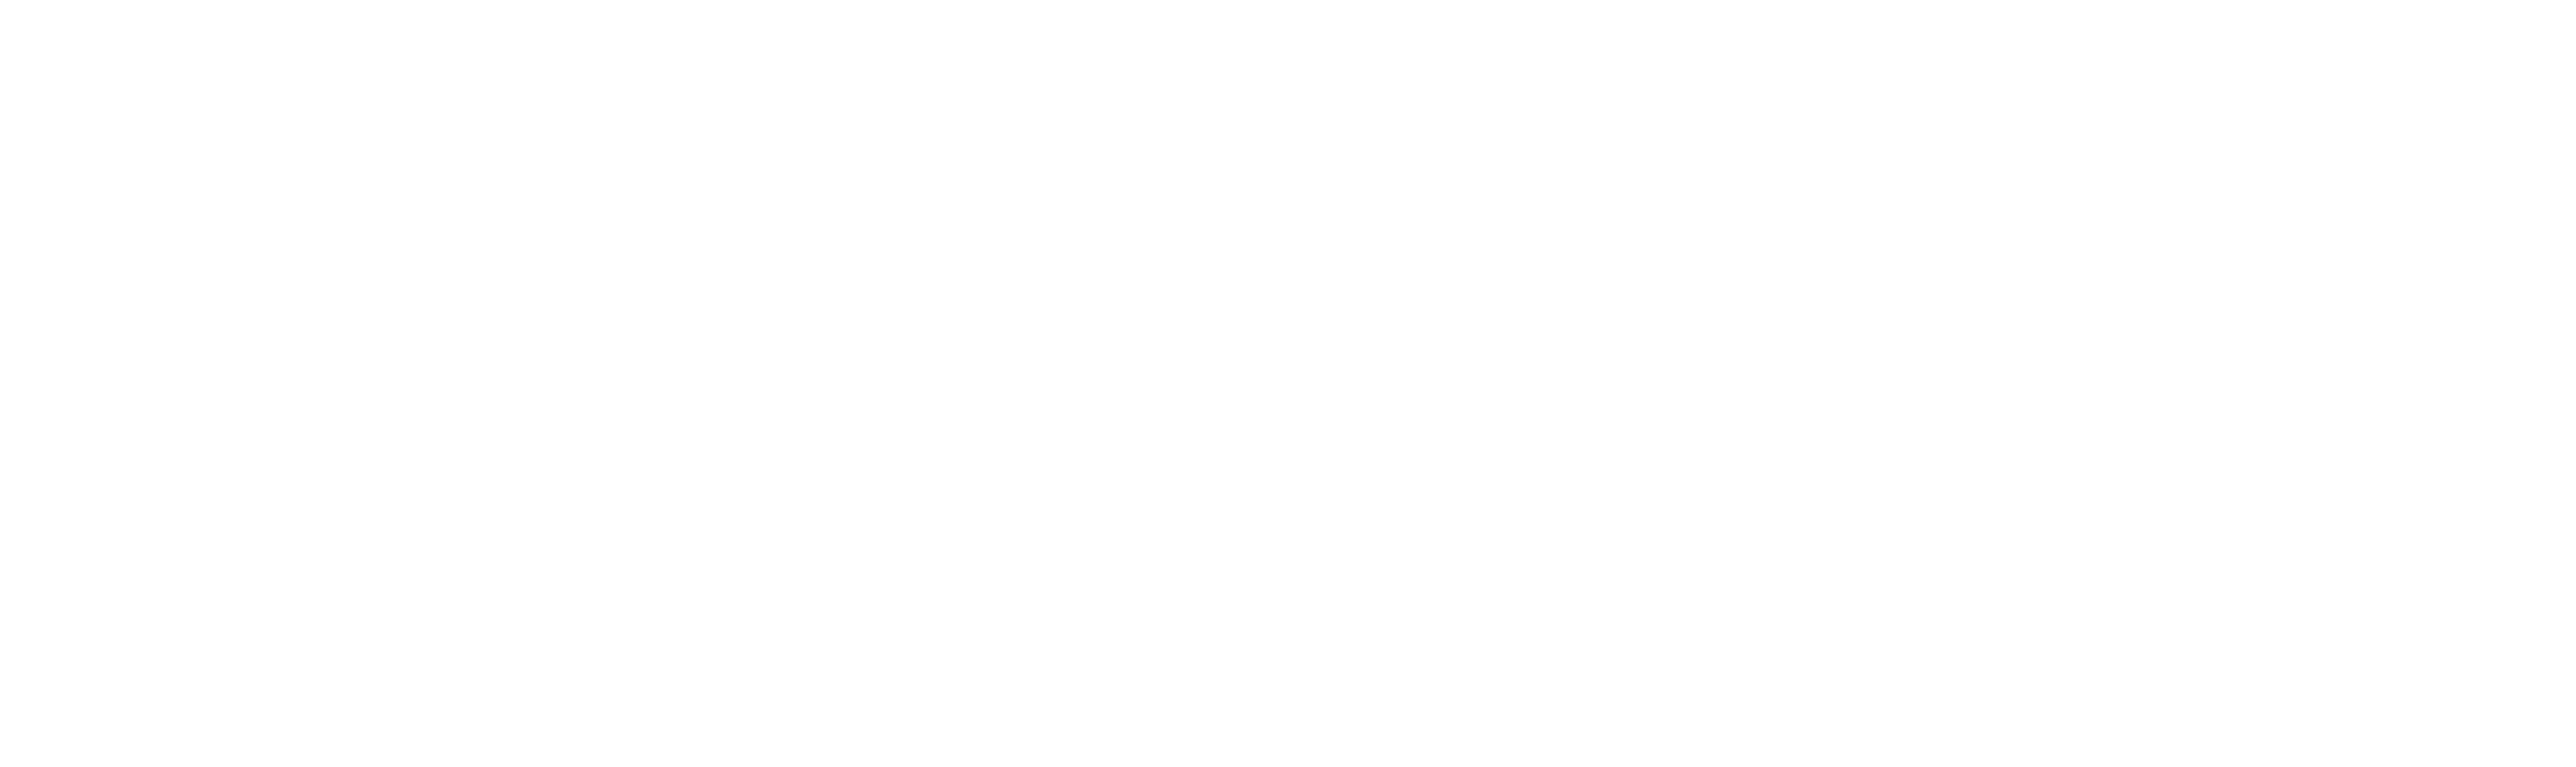 firststar logo white